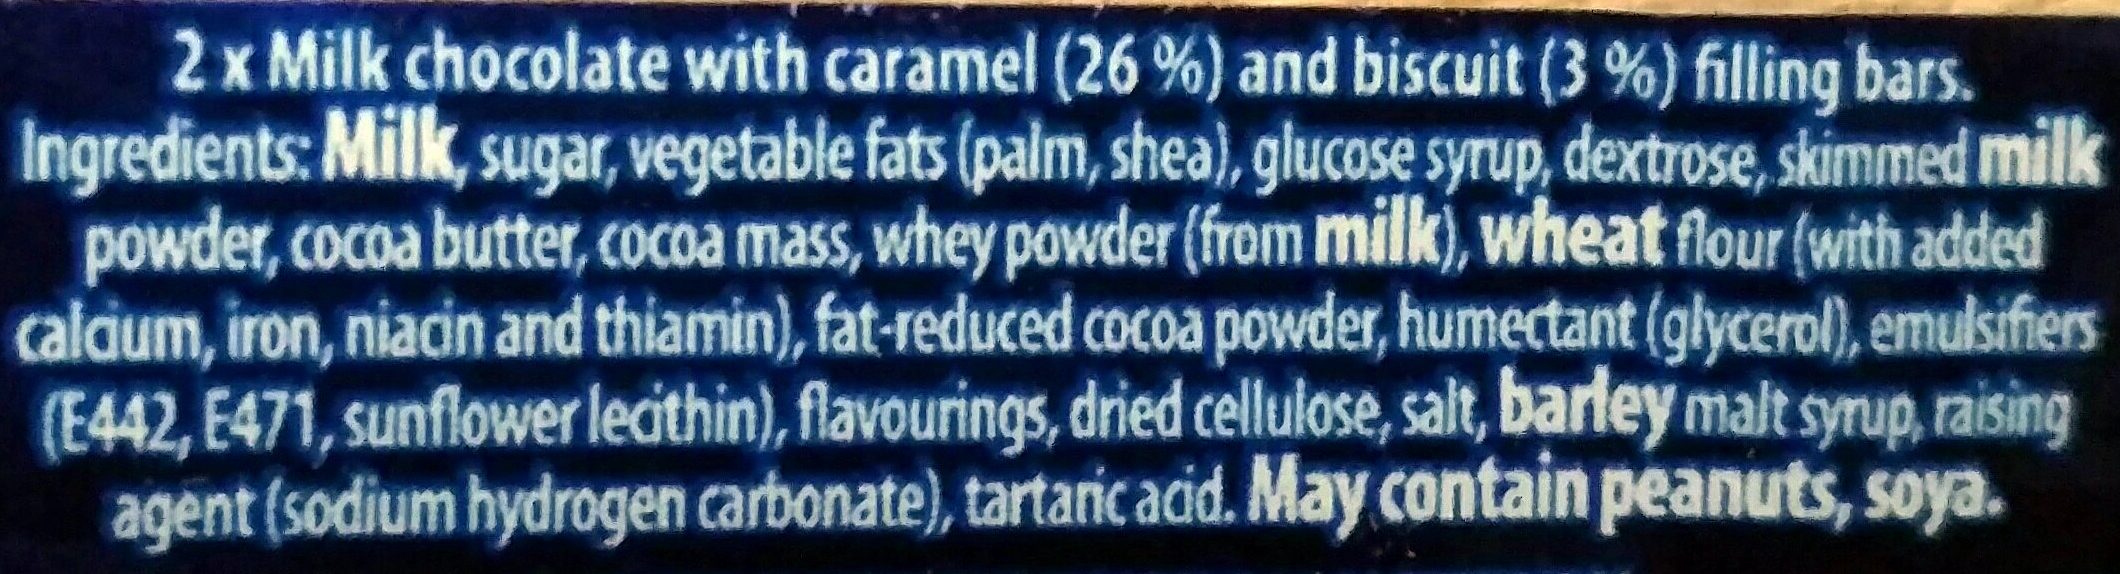 Cadbury boost chocolate bar - Ingredients